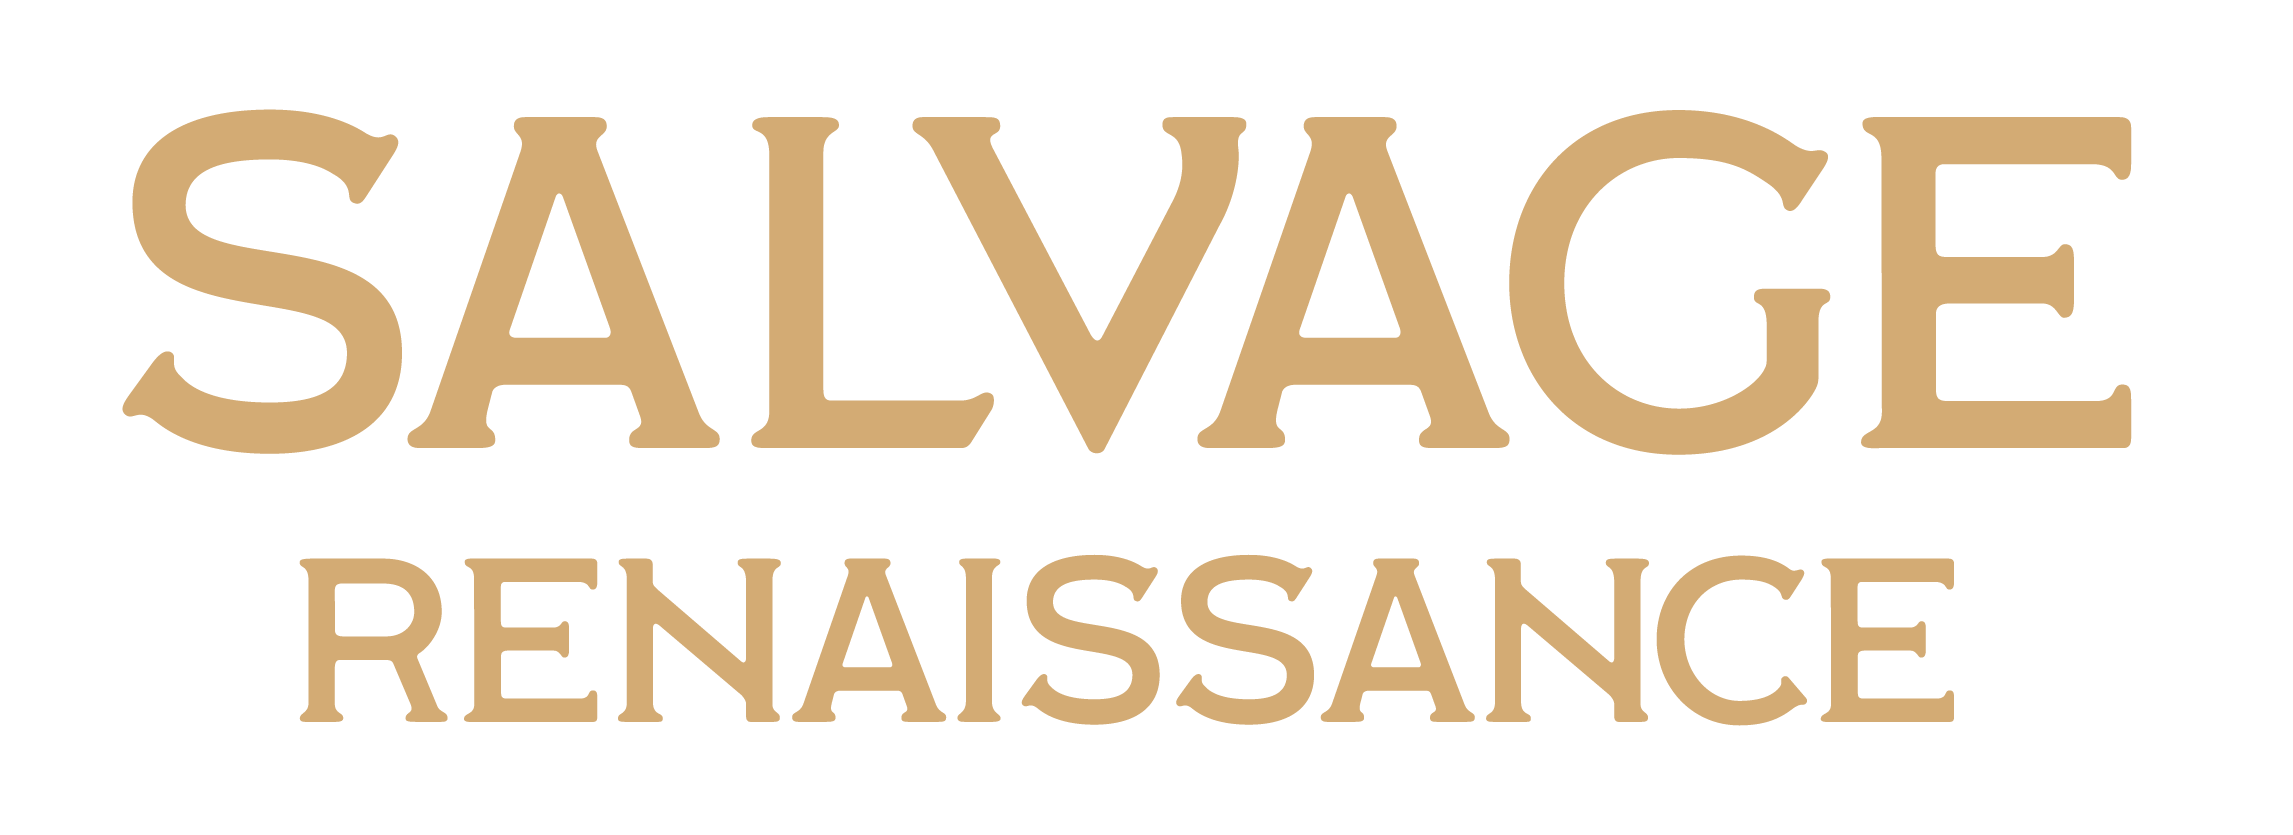 salvage-renaissance-horizontal-logo